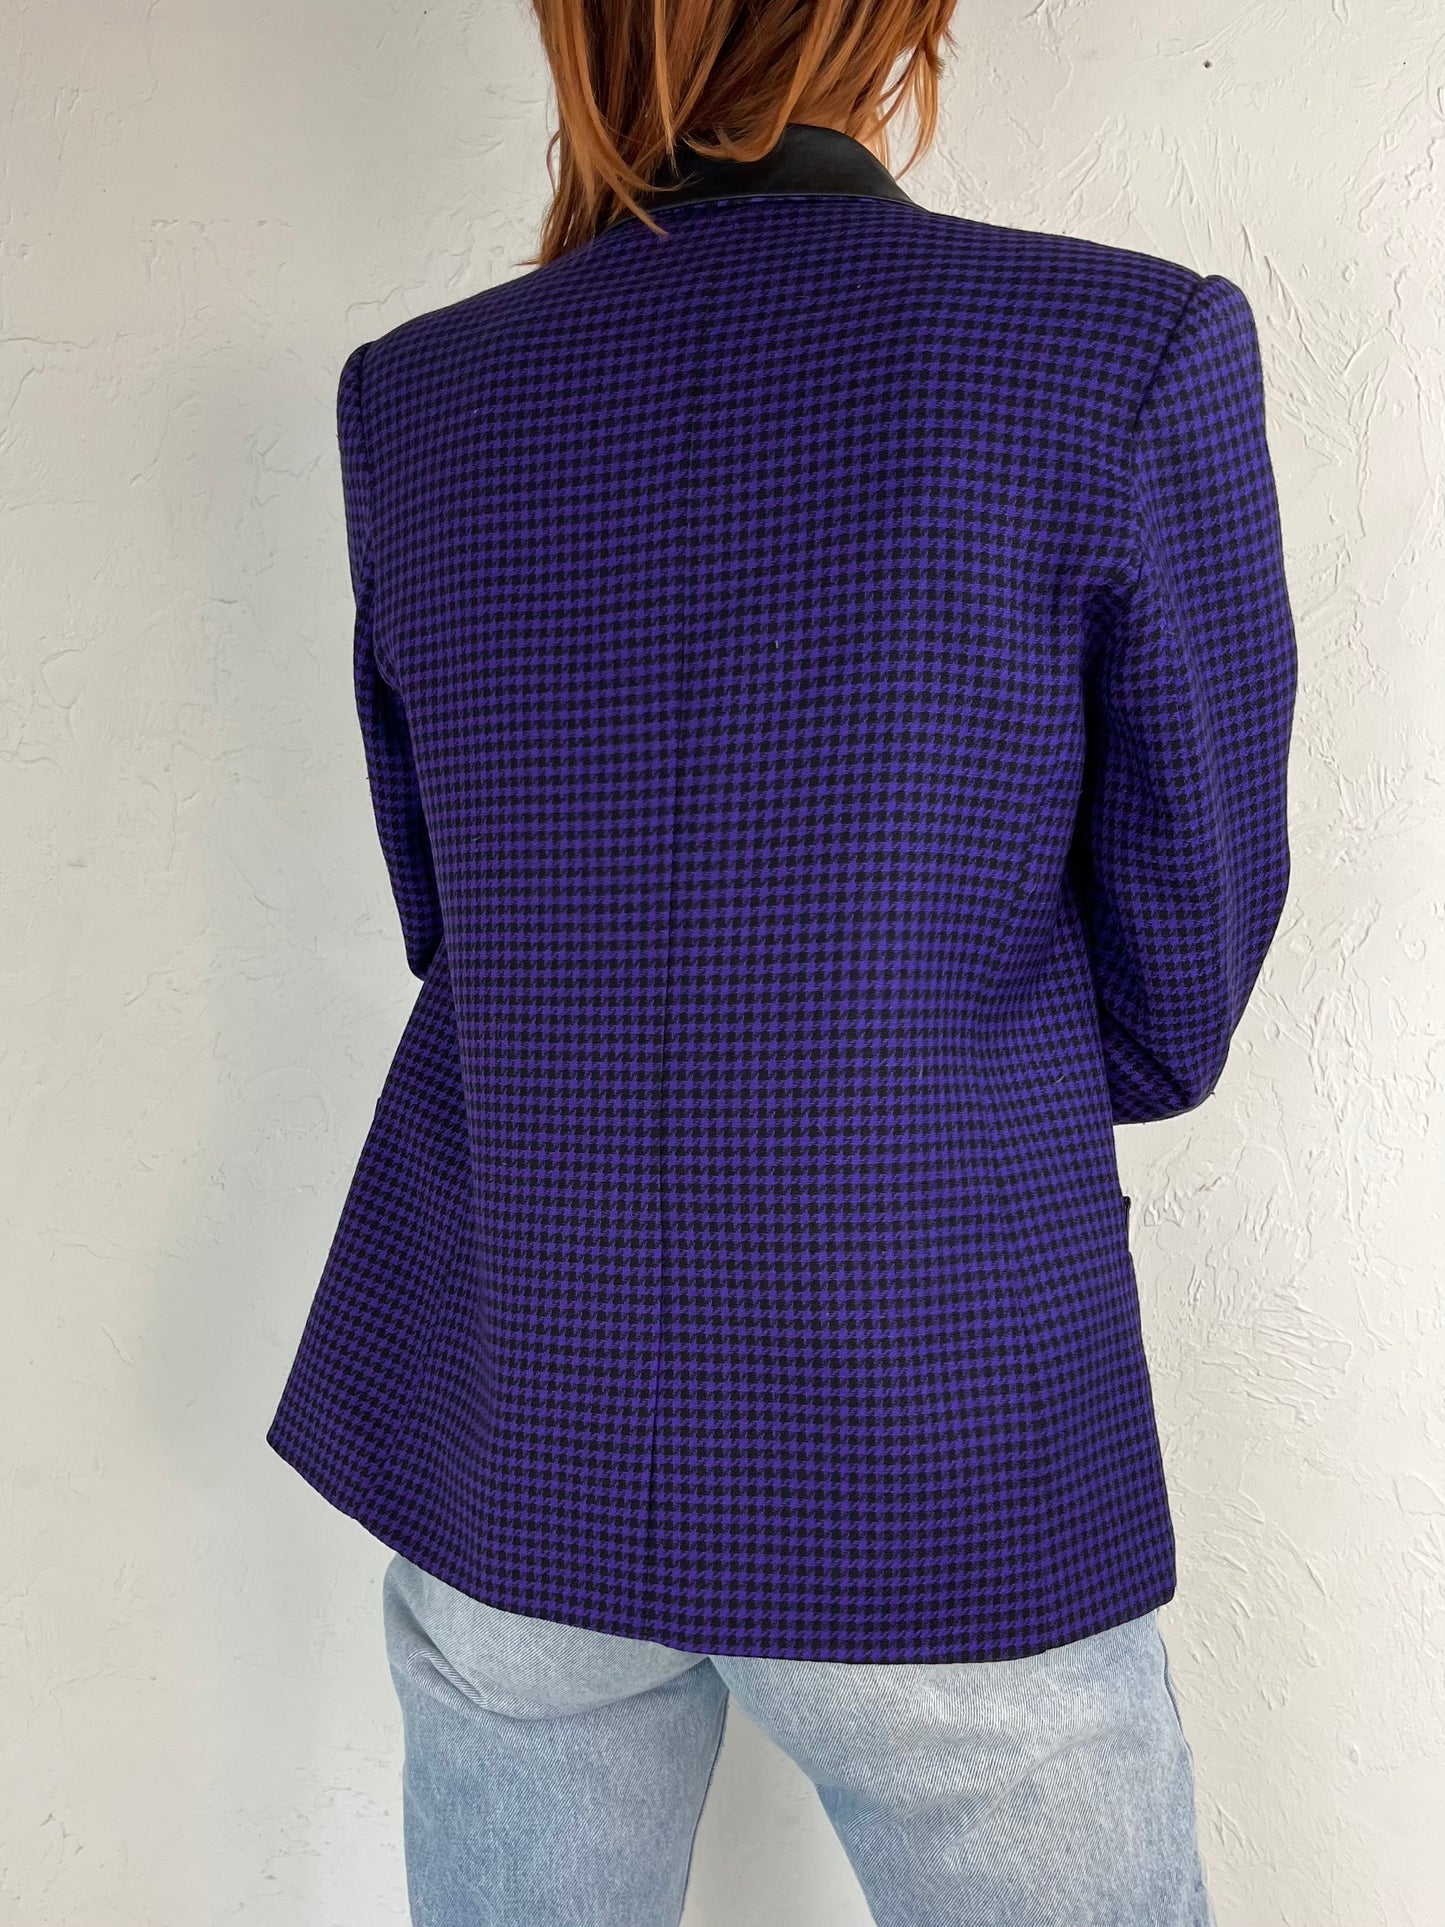 90s ' Braemar Petities' Purple Herringbone Blazer Jacket / Small